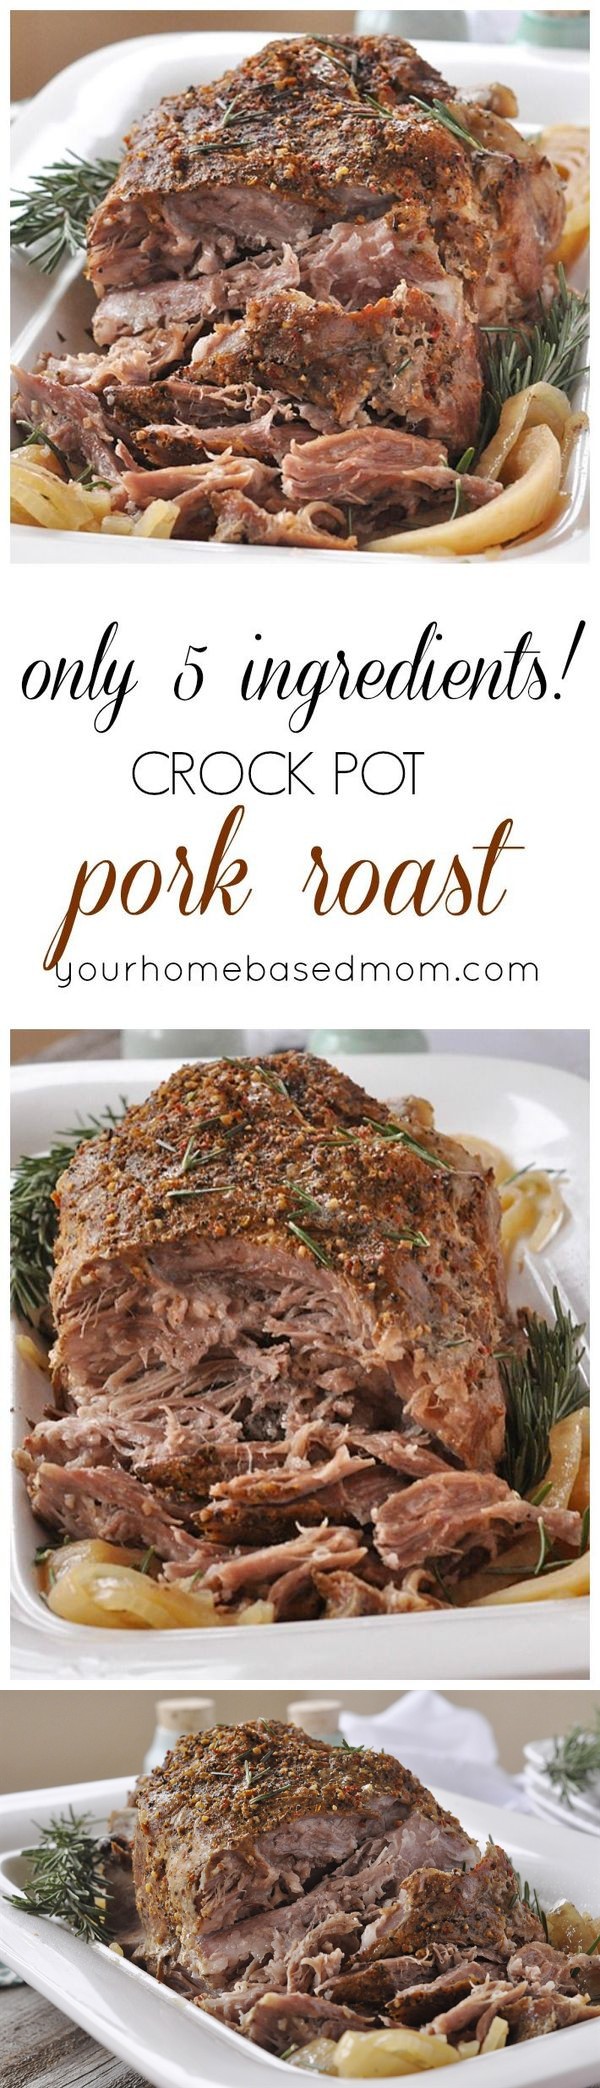 Crockpot Pork Roast only 5 ingredients